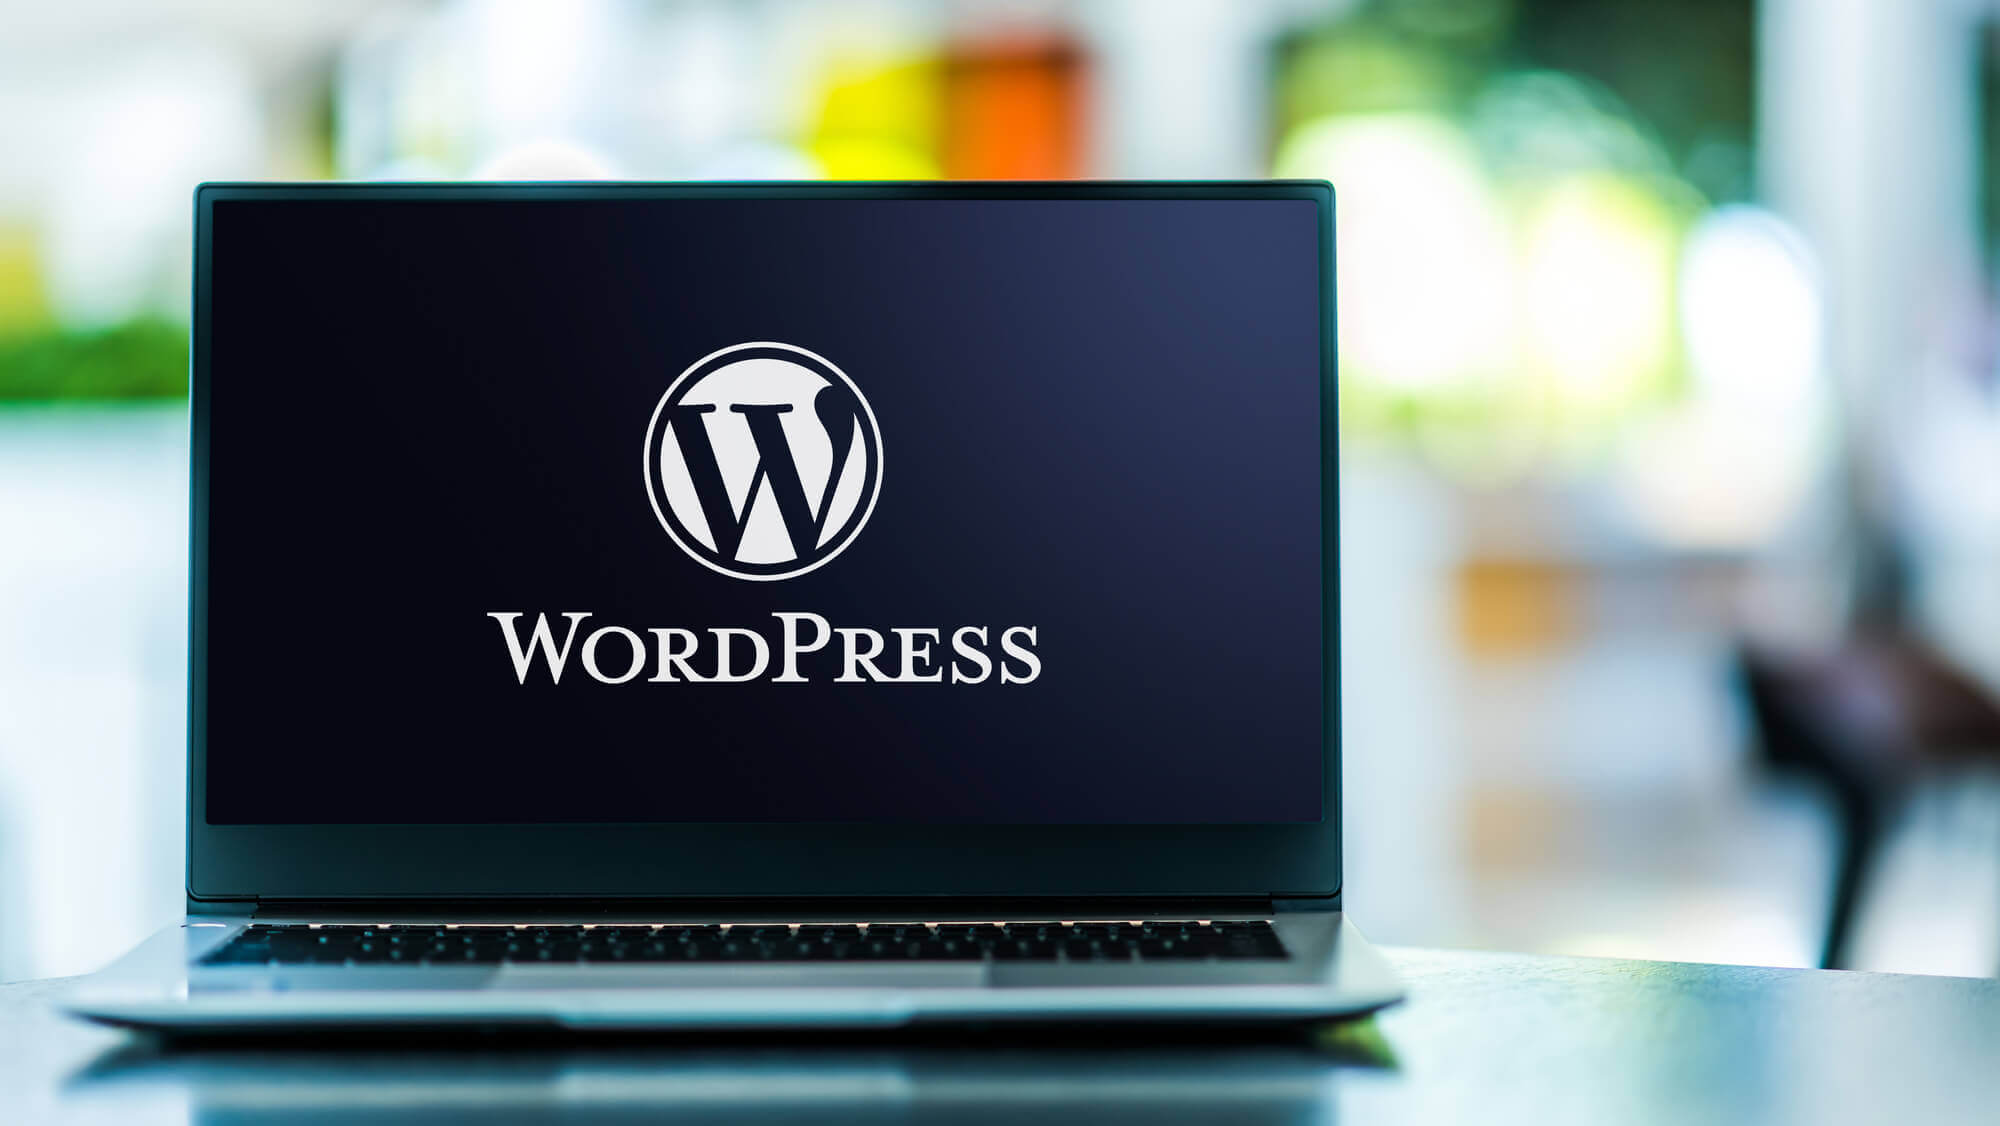 WordPress weboldal